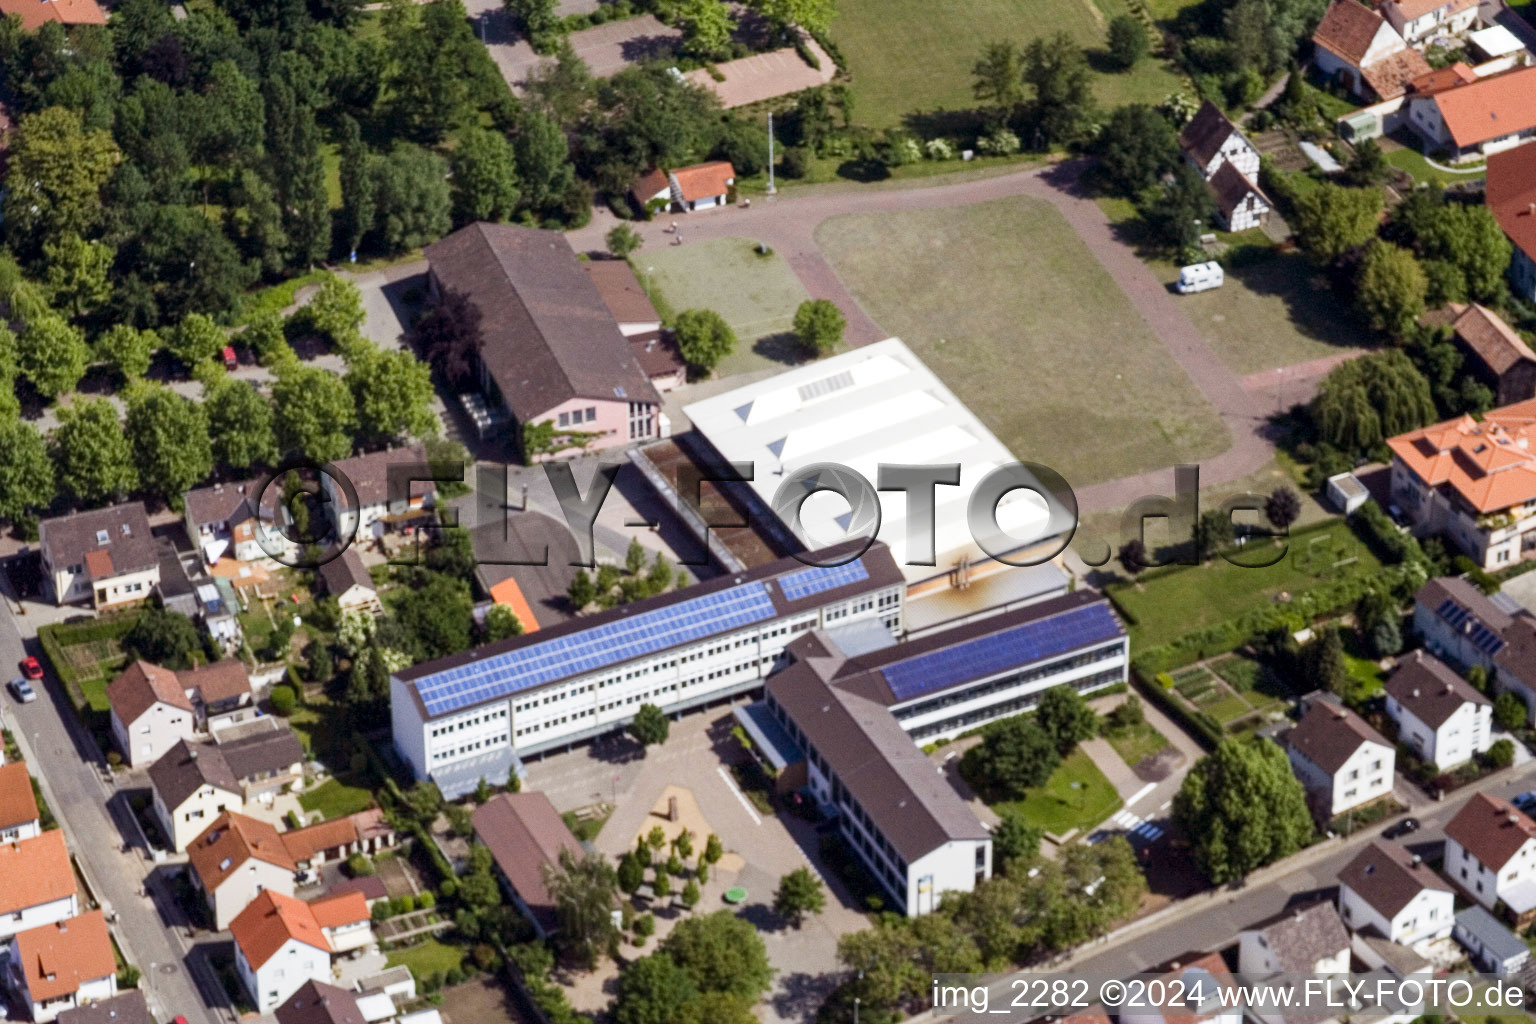 Aerial photograpy of District Herxheim in Herxheim bei Landau/Pfalz in the state Rhineland-Palatinate, Germany